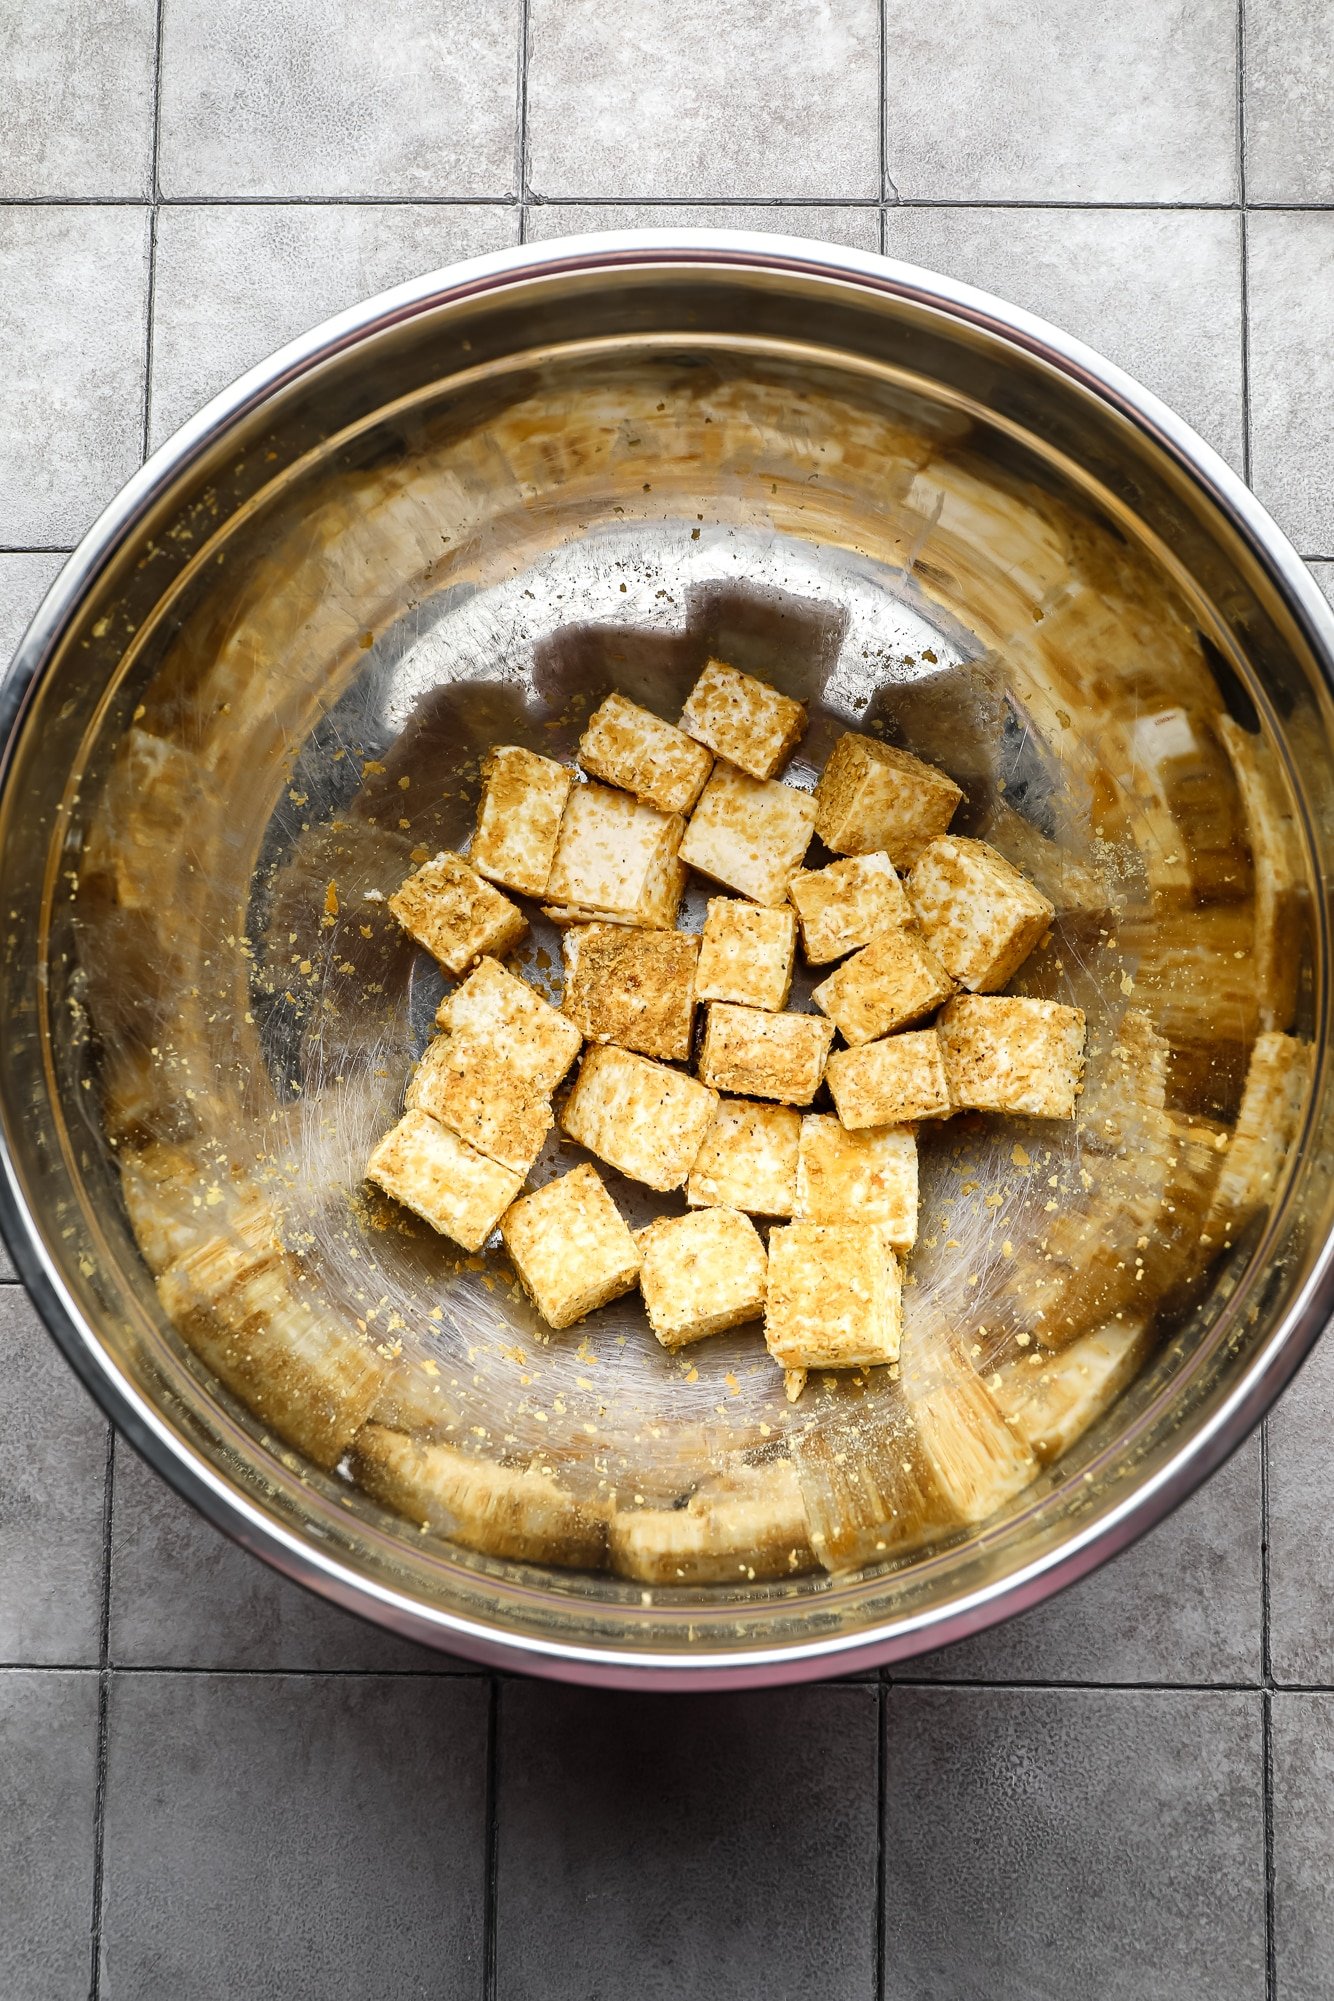 seasoned tofu cubes in a large metal bowl.